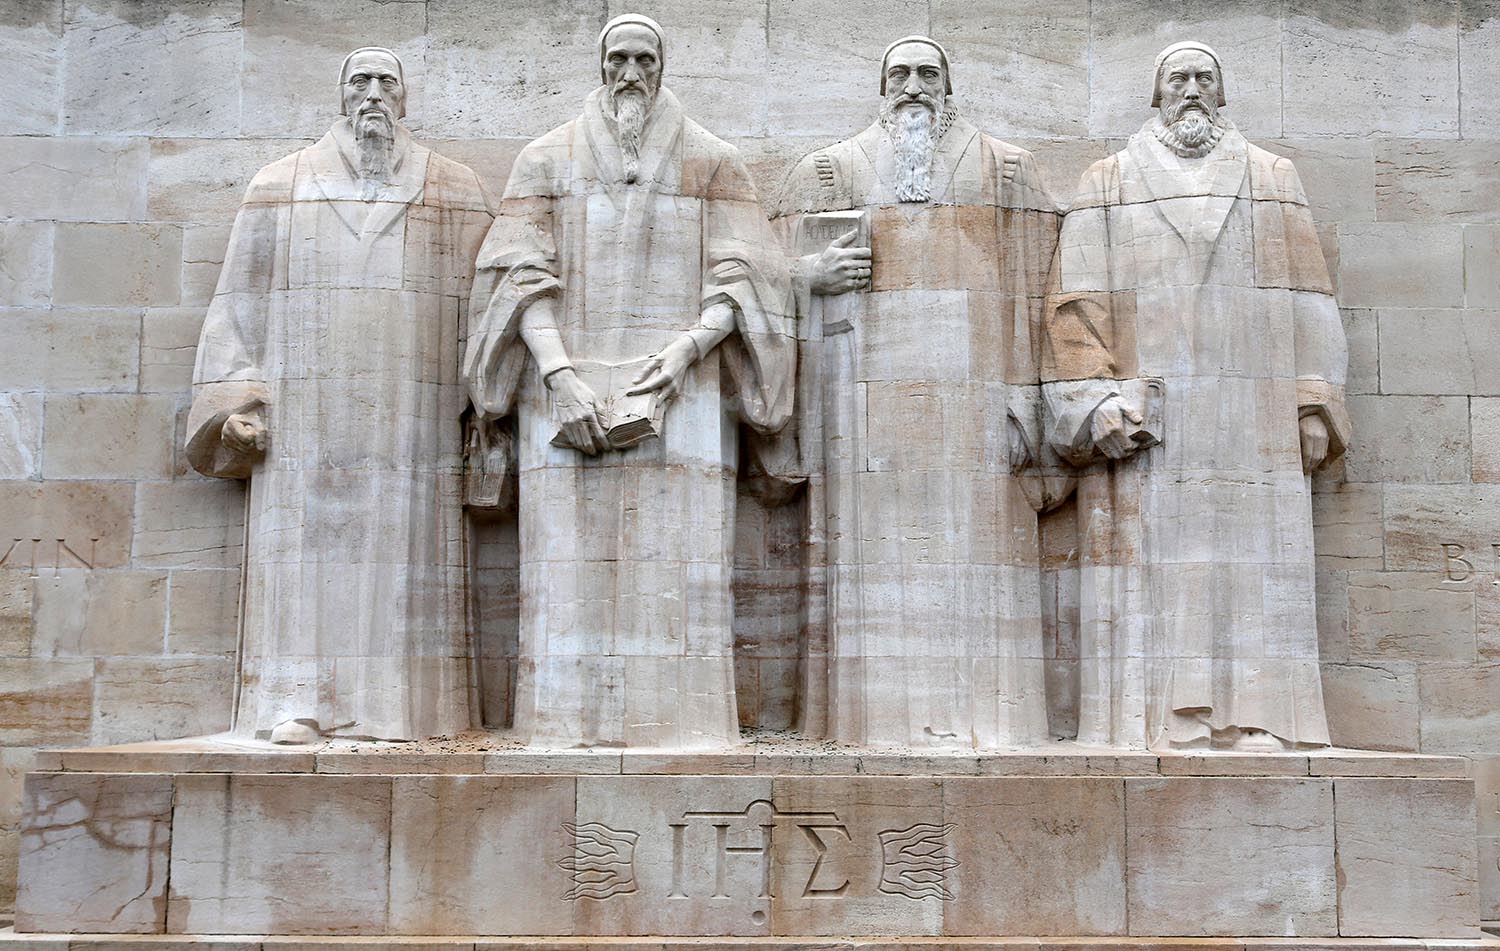 Sculptural composition "Reformation Wall" in Geneva